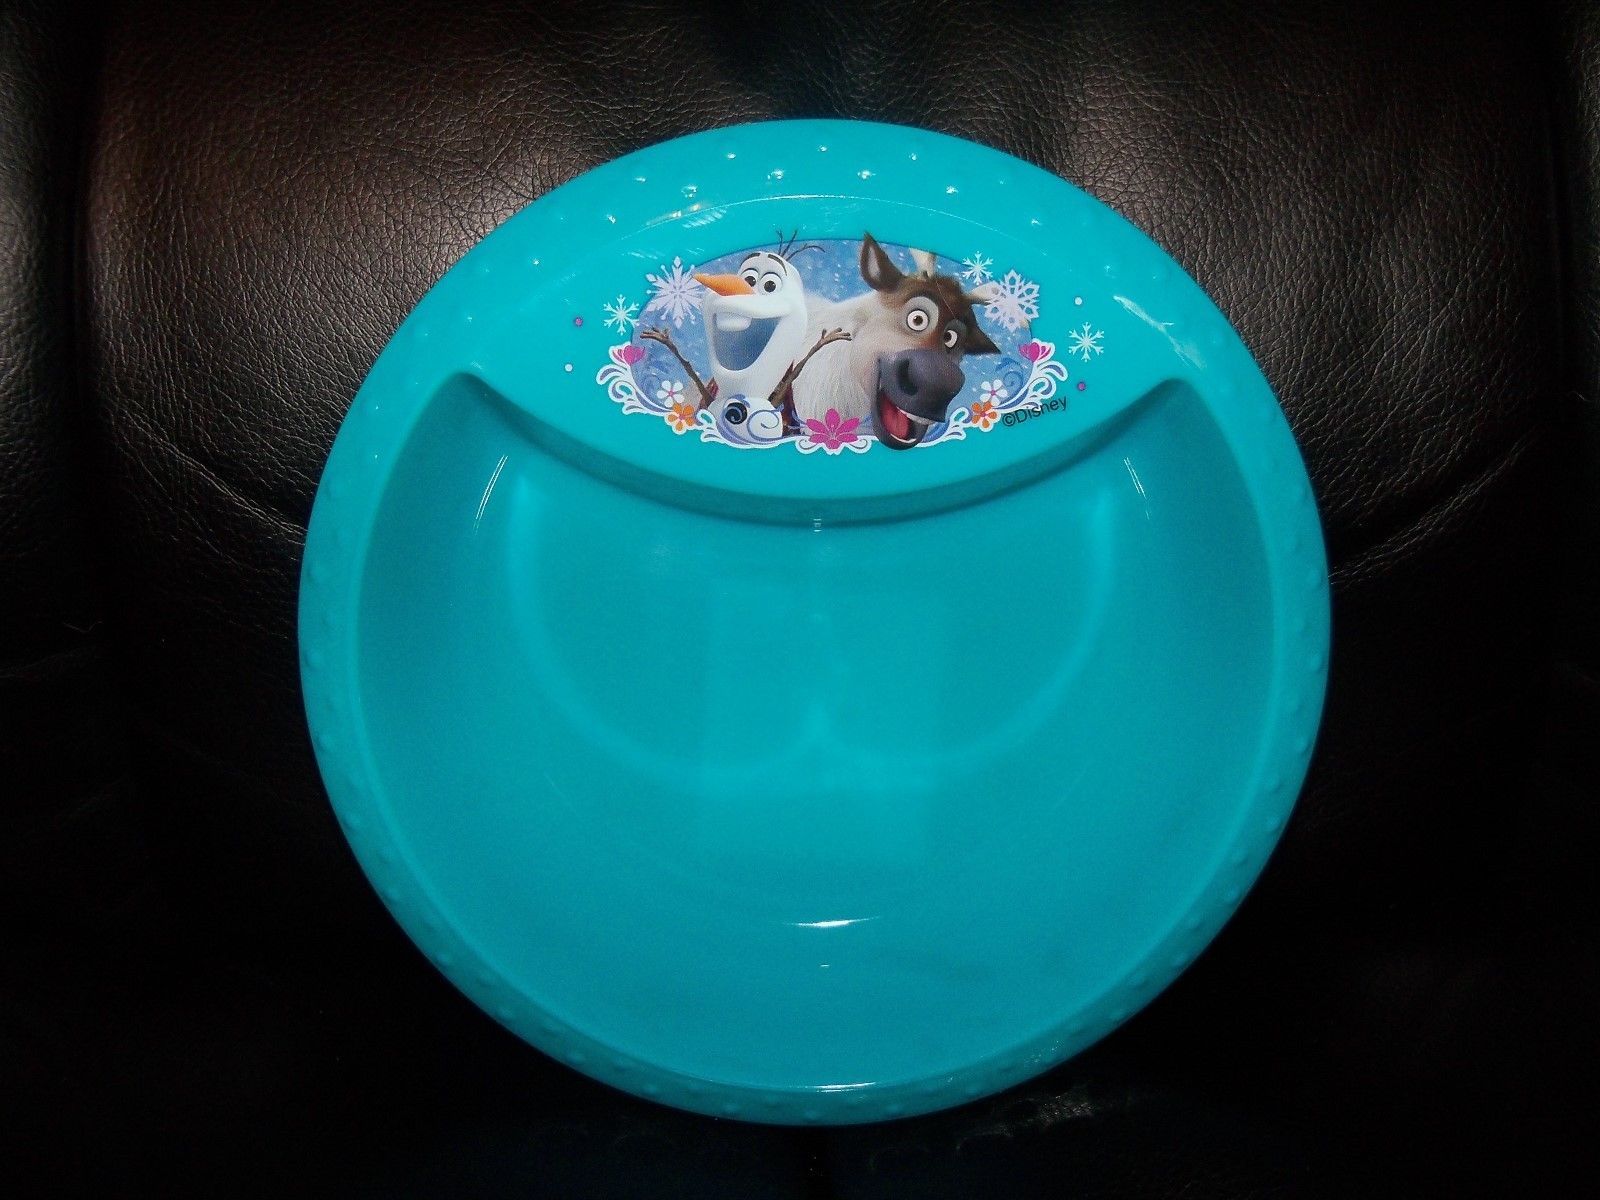 Disney Frozen Olaf Sven Plastic Teal Bowl And 10 Similar Items